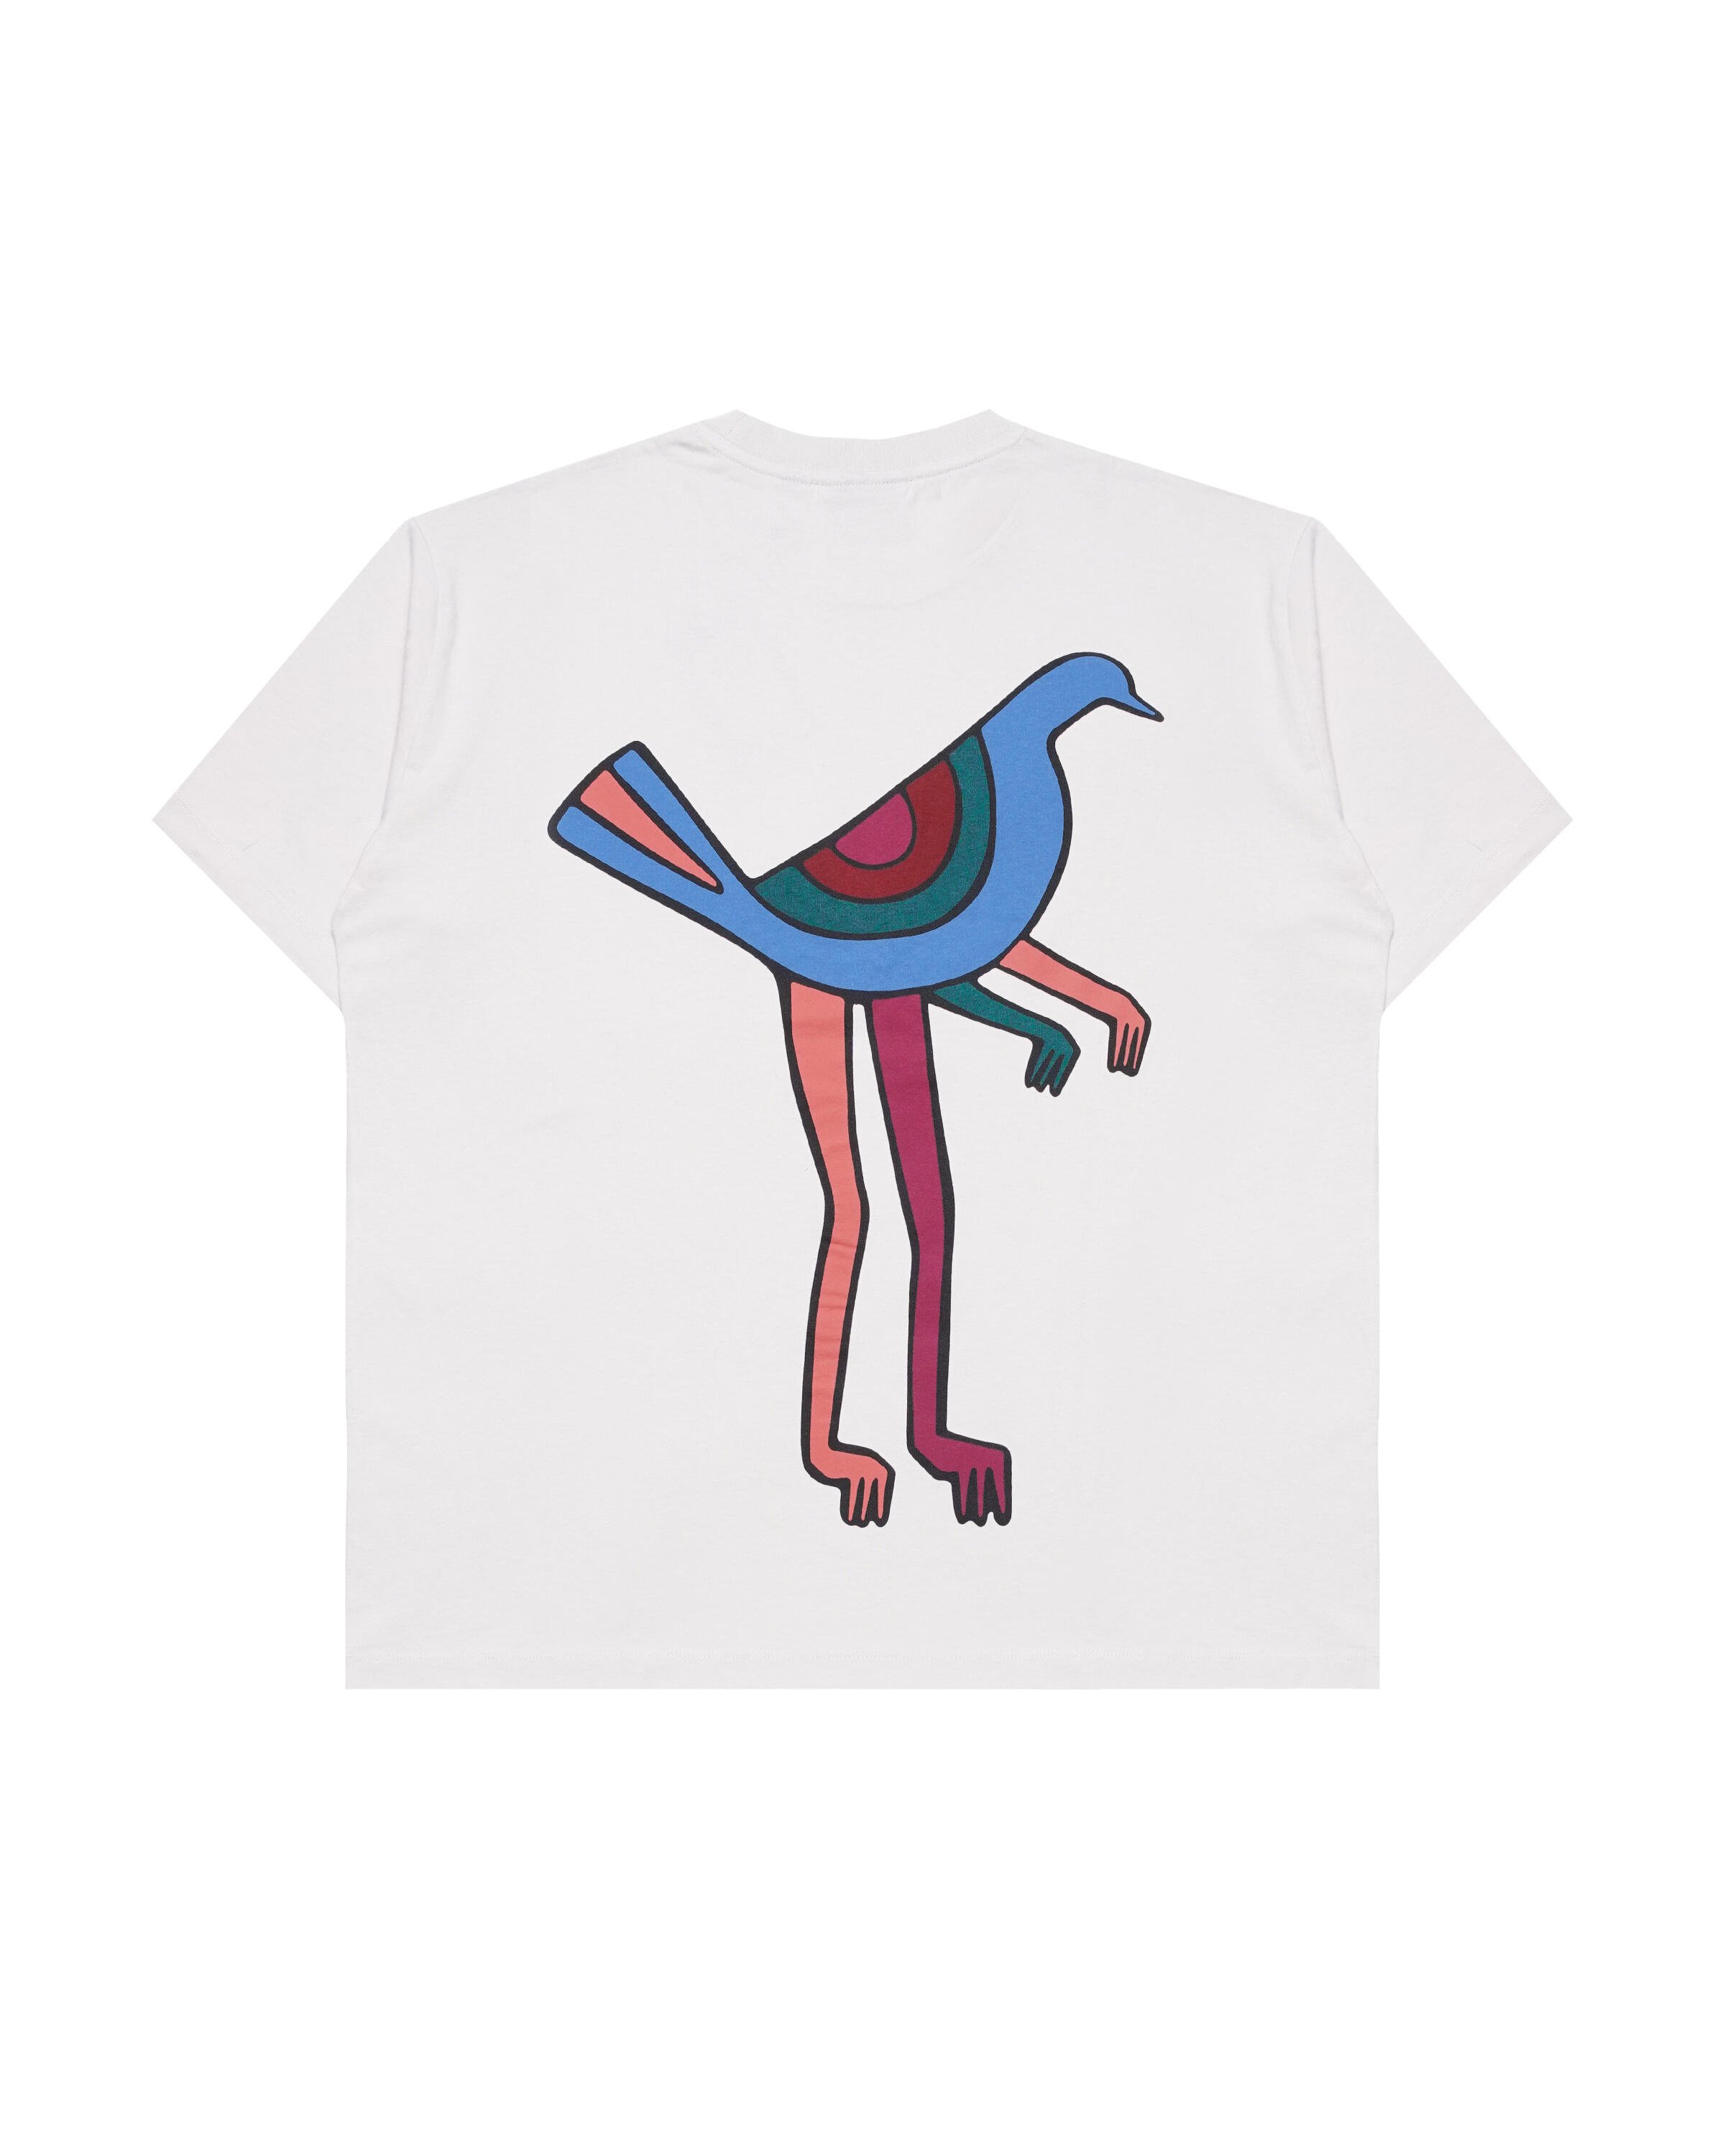 by Parra pigeon legs t-shirt